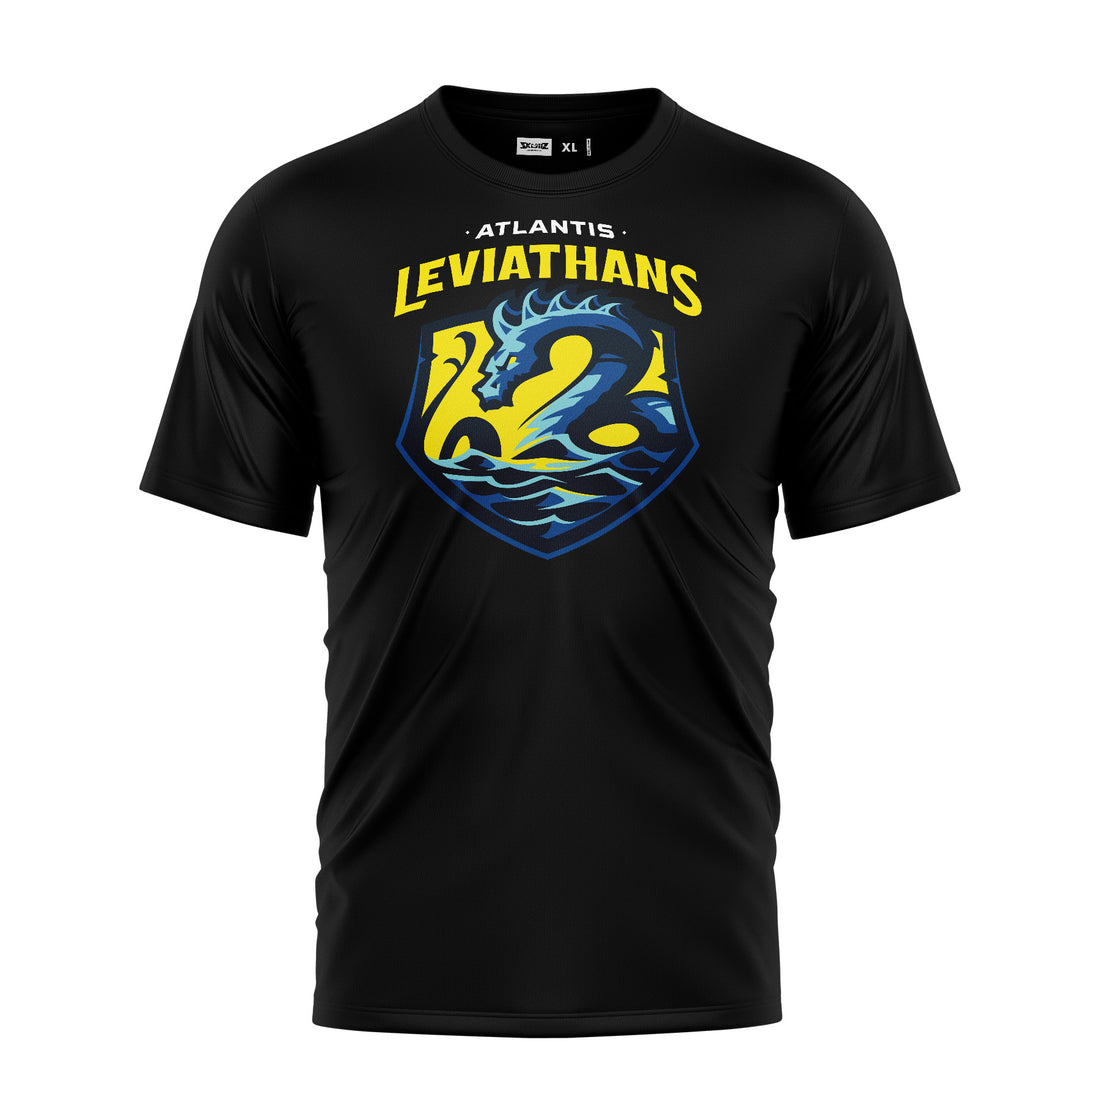 Atlantis Leviathans Logo Shirt - Black